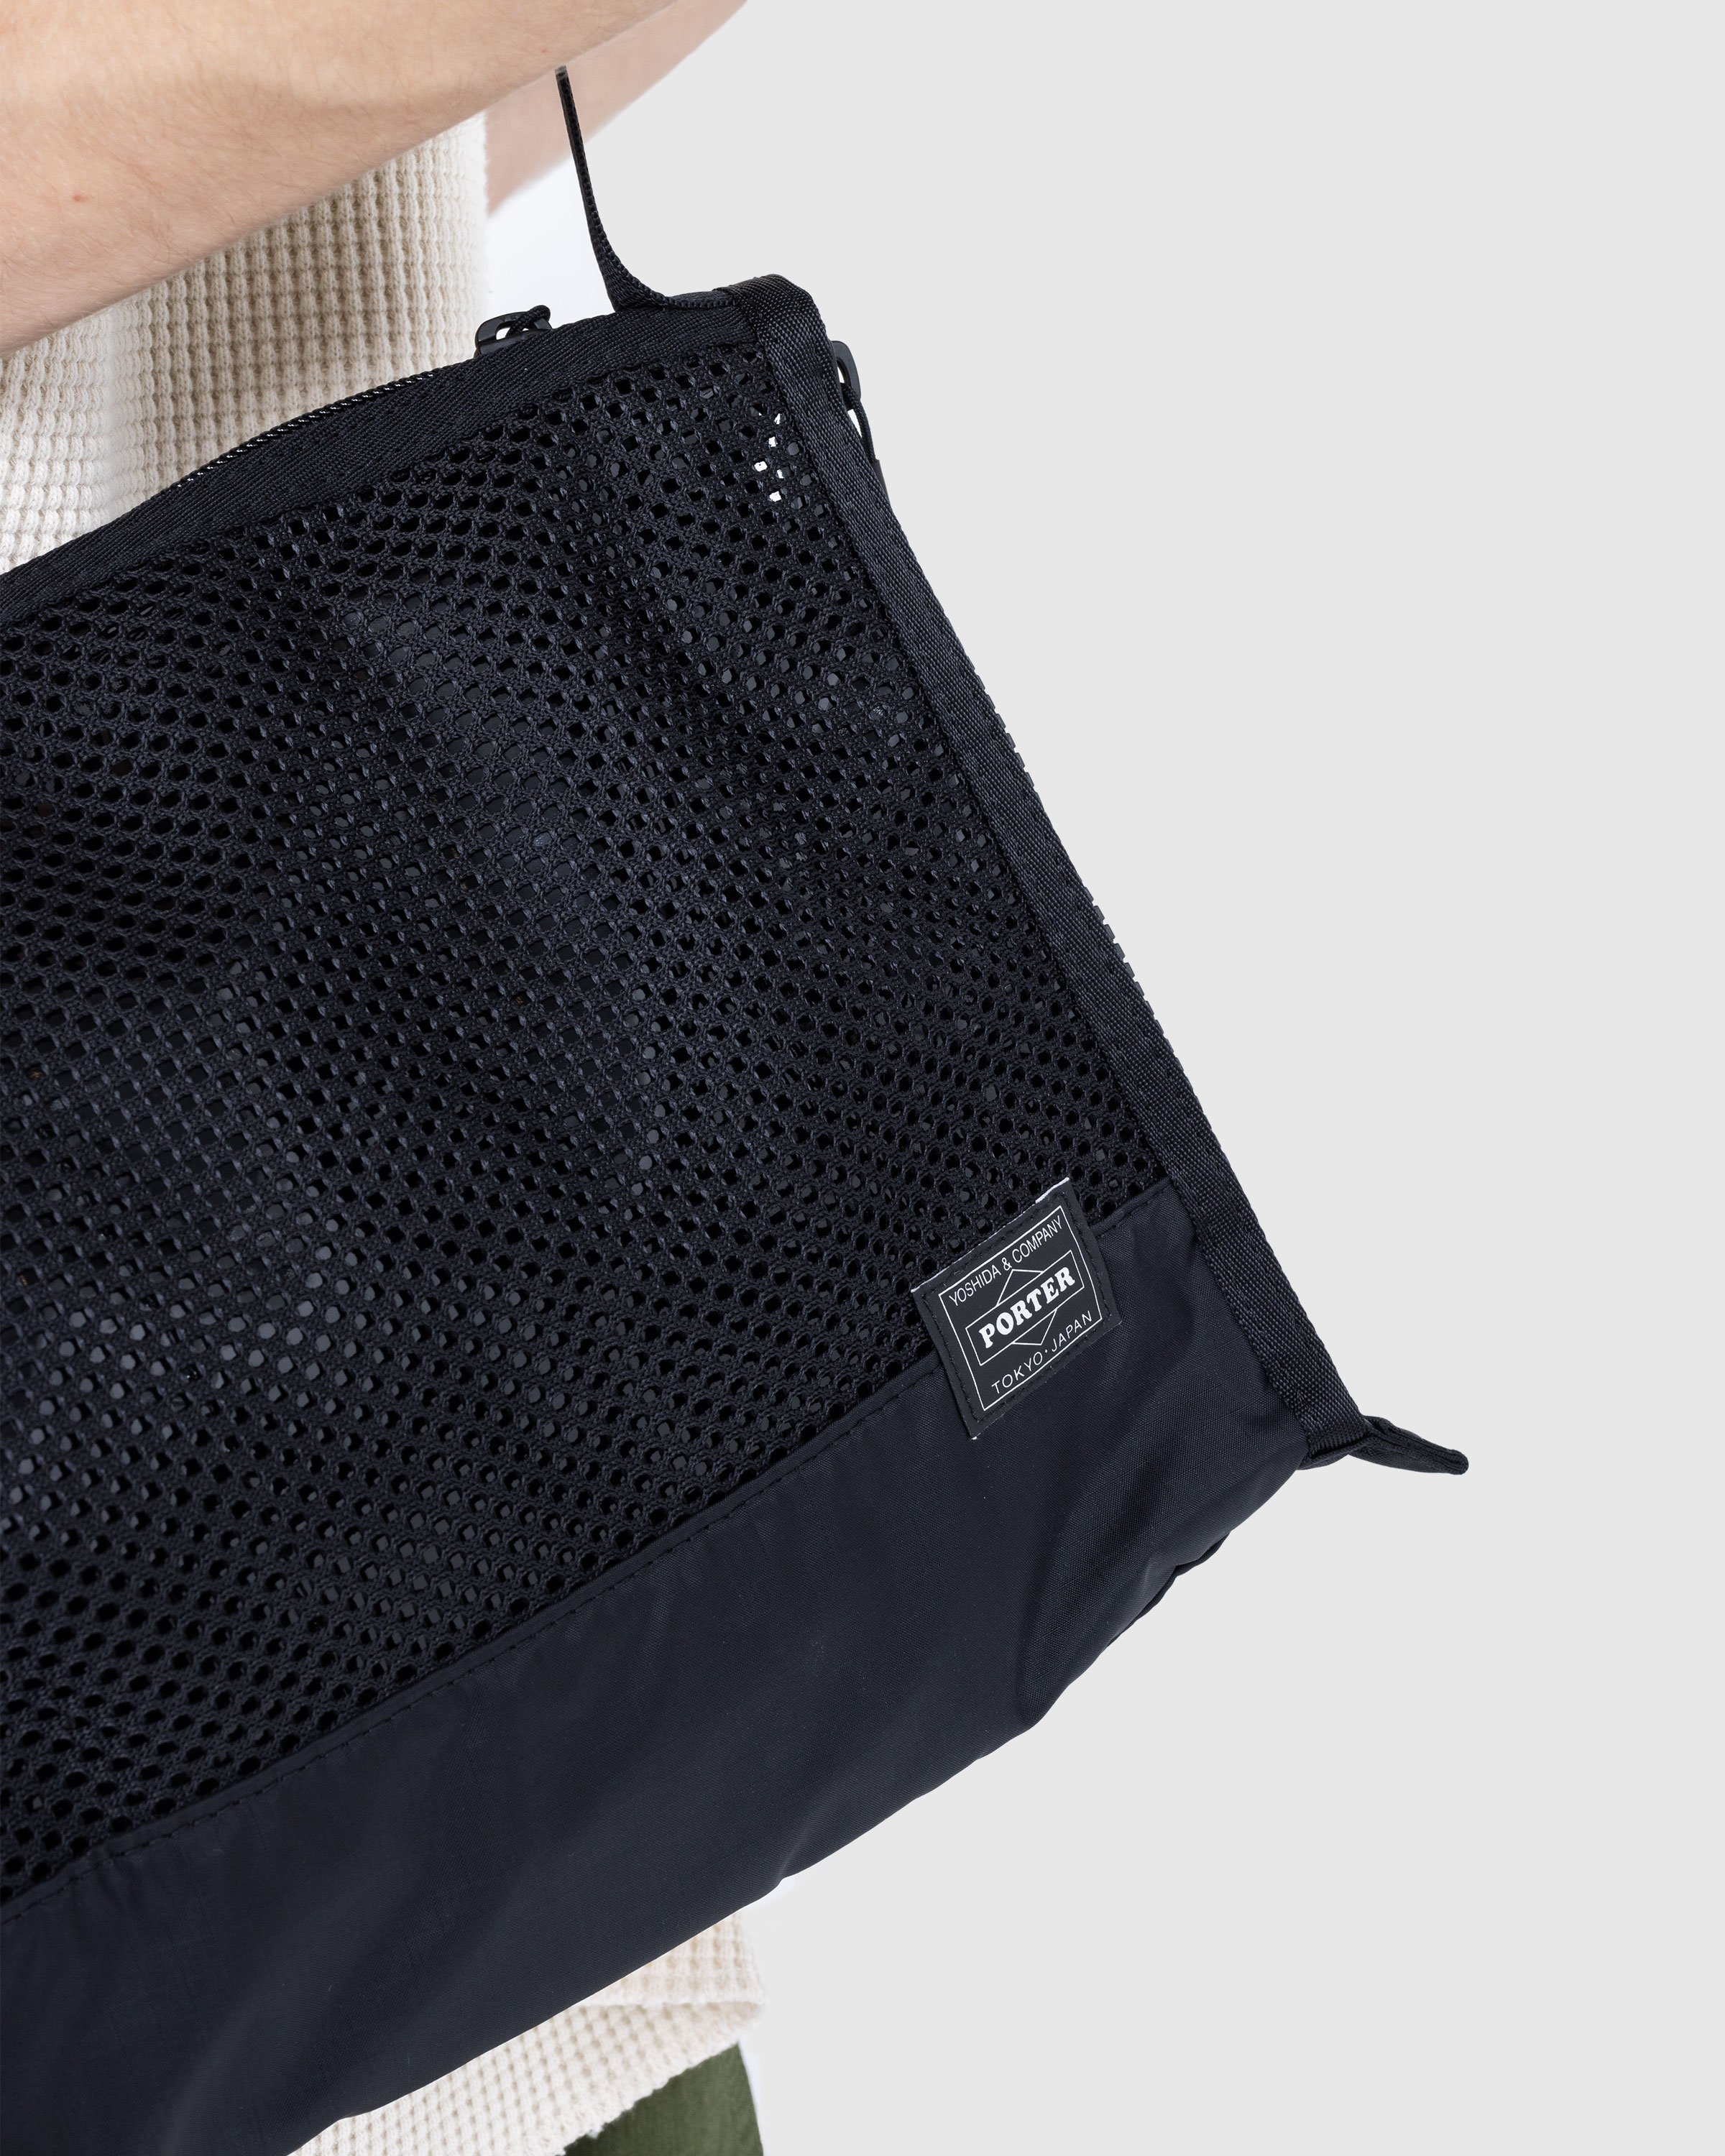 Porter-Yoshida & Co. - Screen Front Side Bag Black - Accessories - Black - Image 3